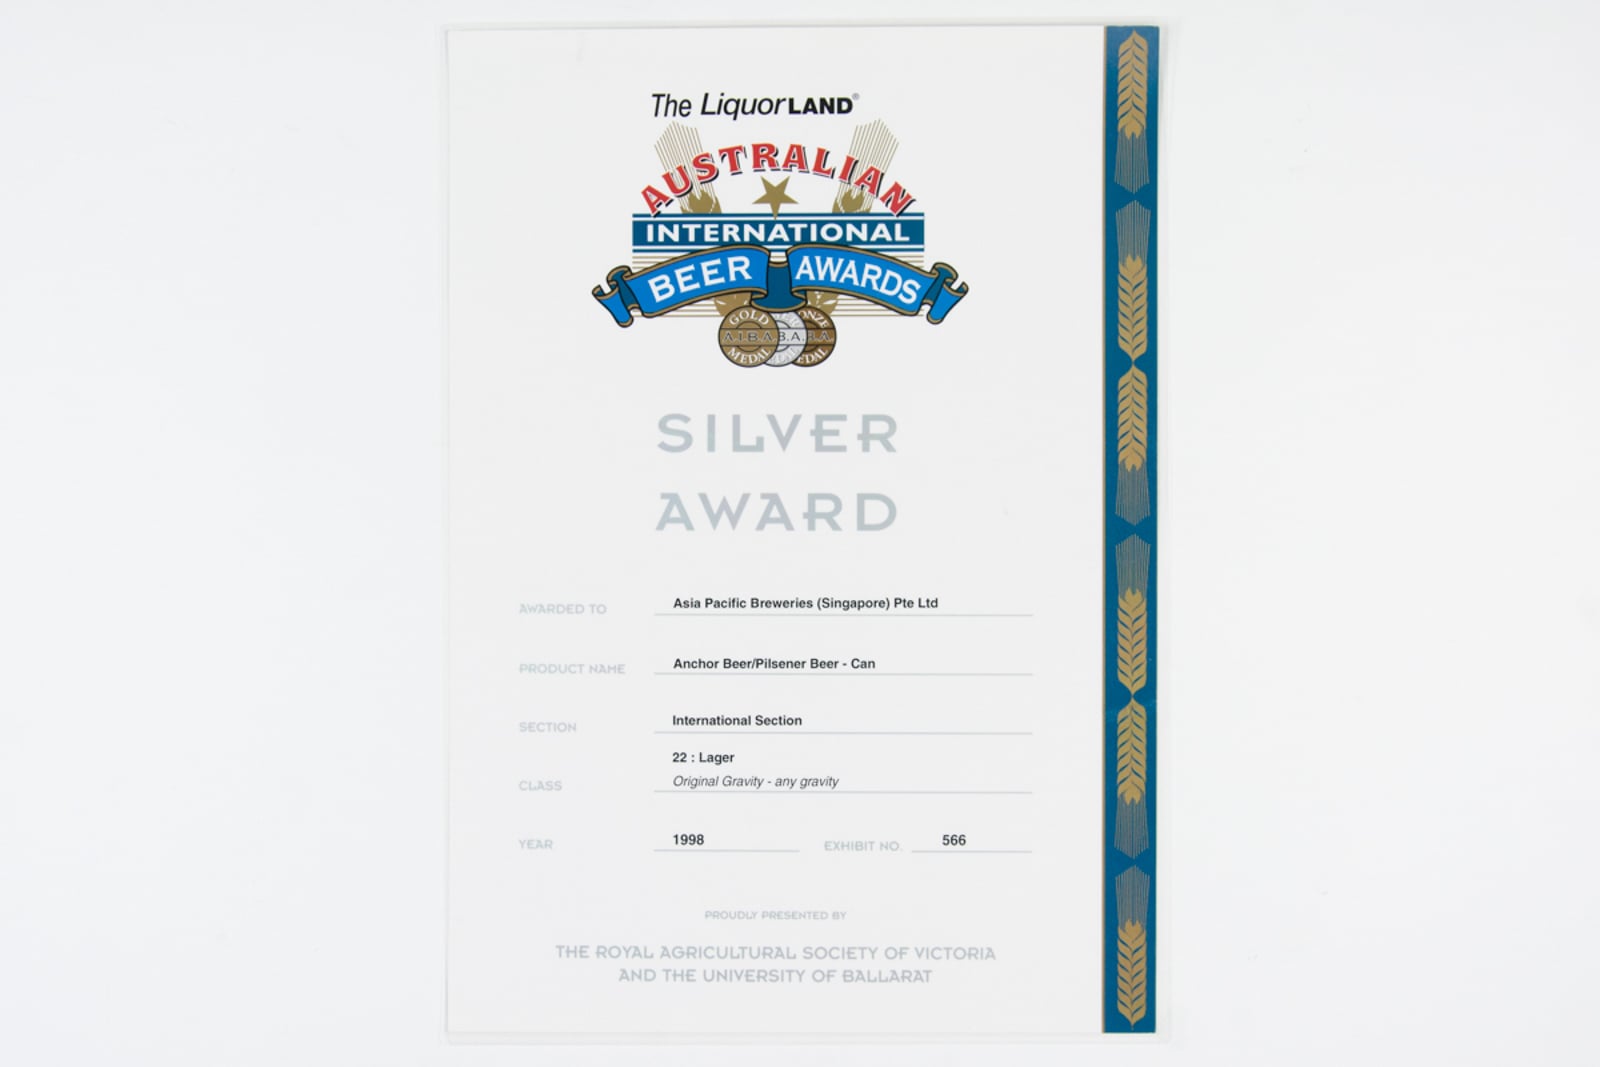 Anchor Beer / Pilsener Beer (Can) Silver Award, Australian International Beer Awards Certificate 1998